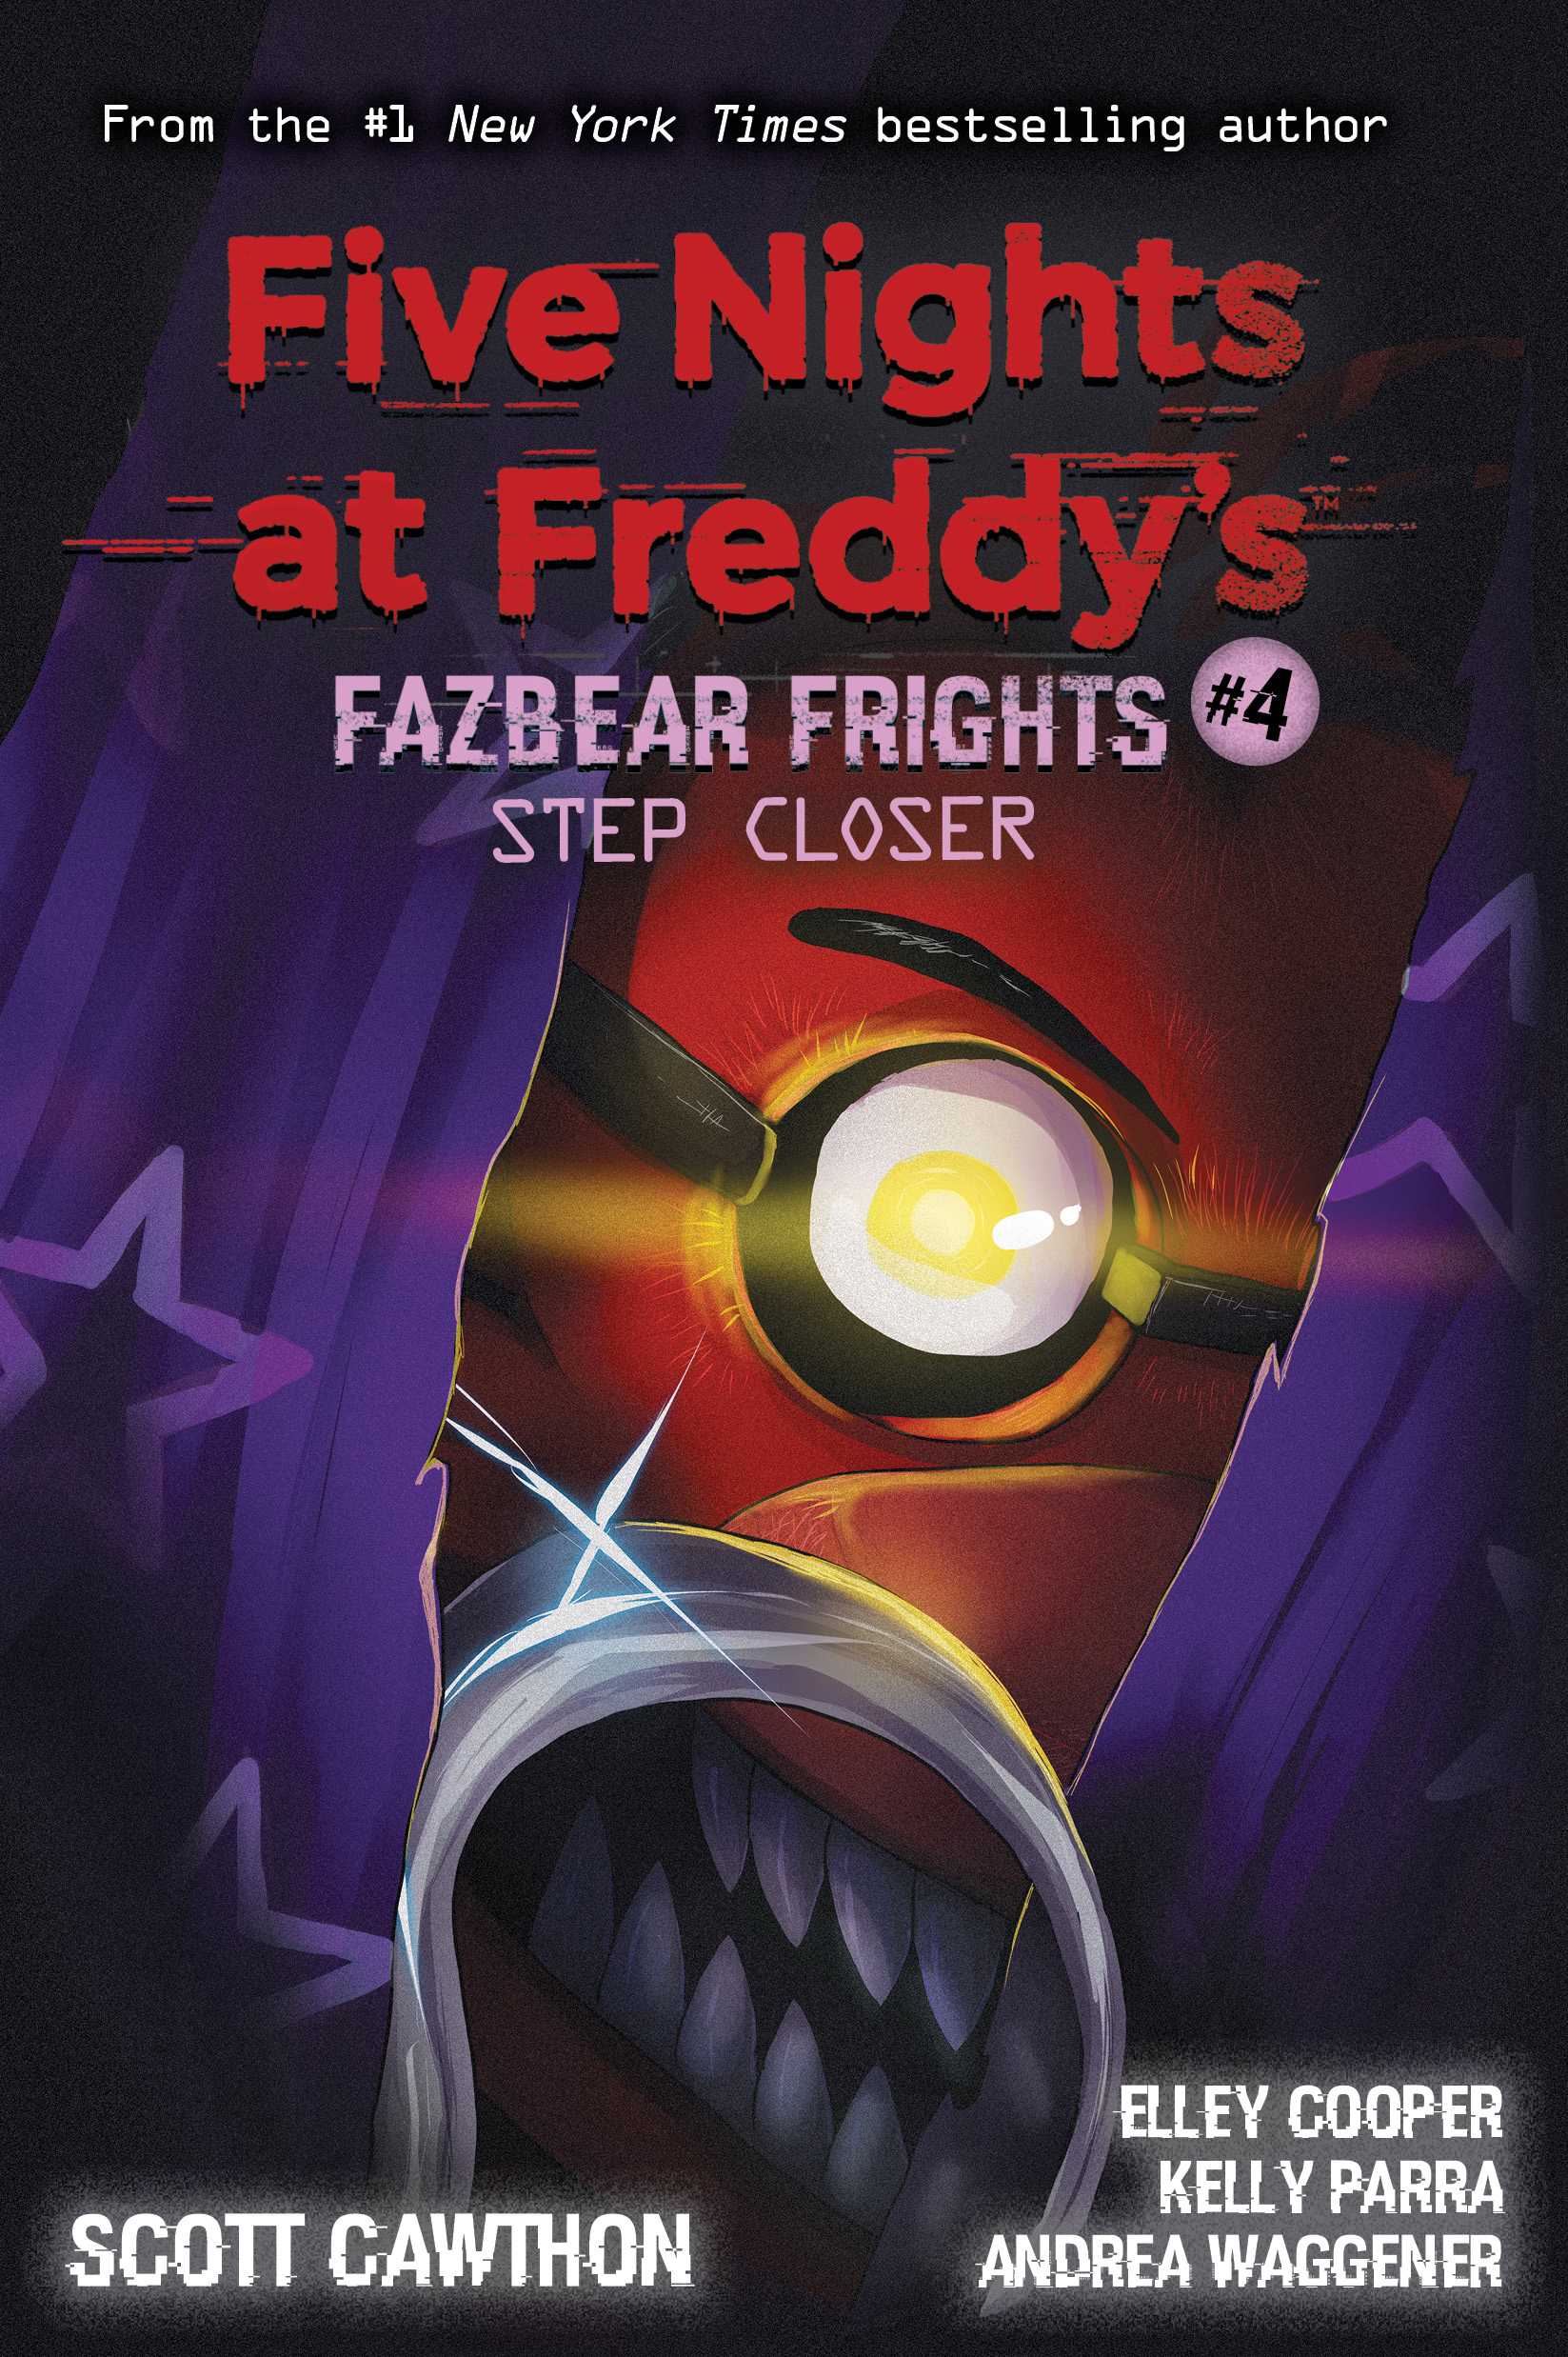 FNAF LORE QUIZ  Five Nigths at Freddy's 360º Video 